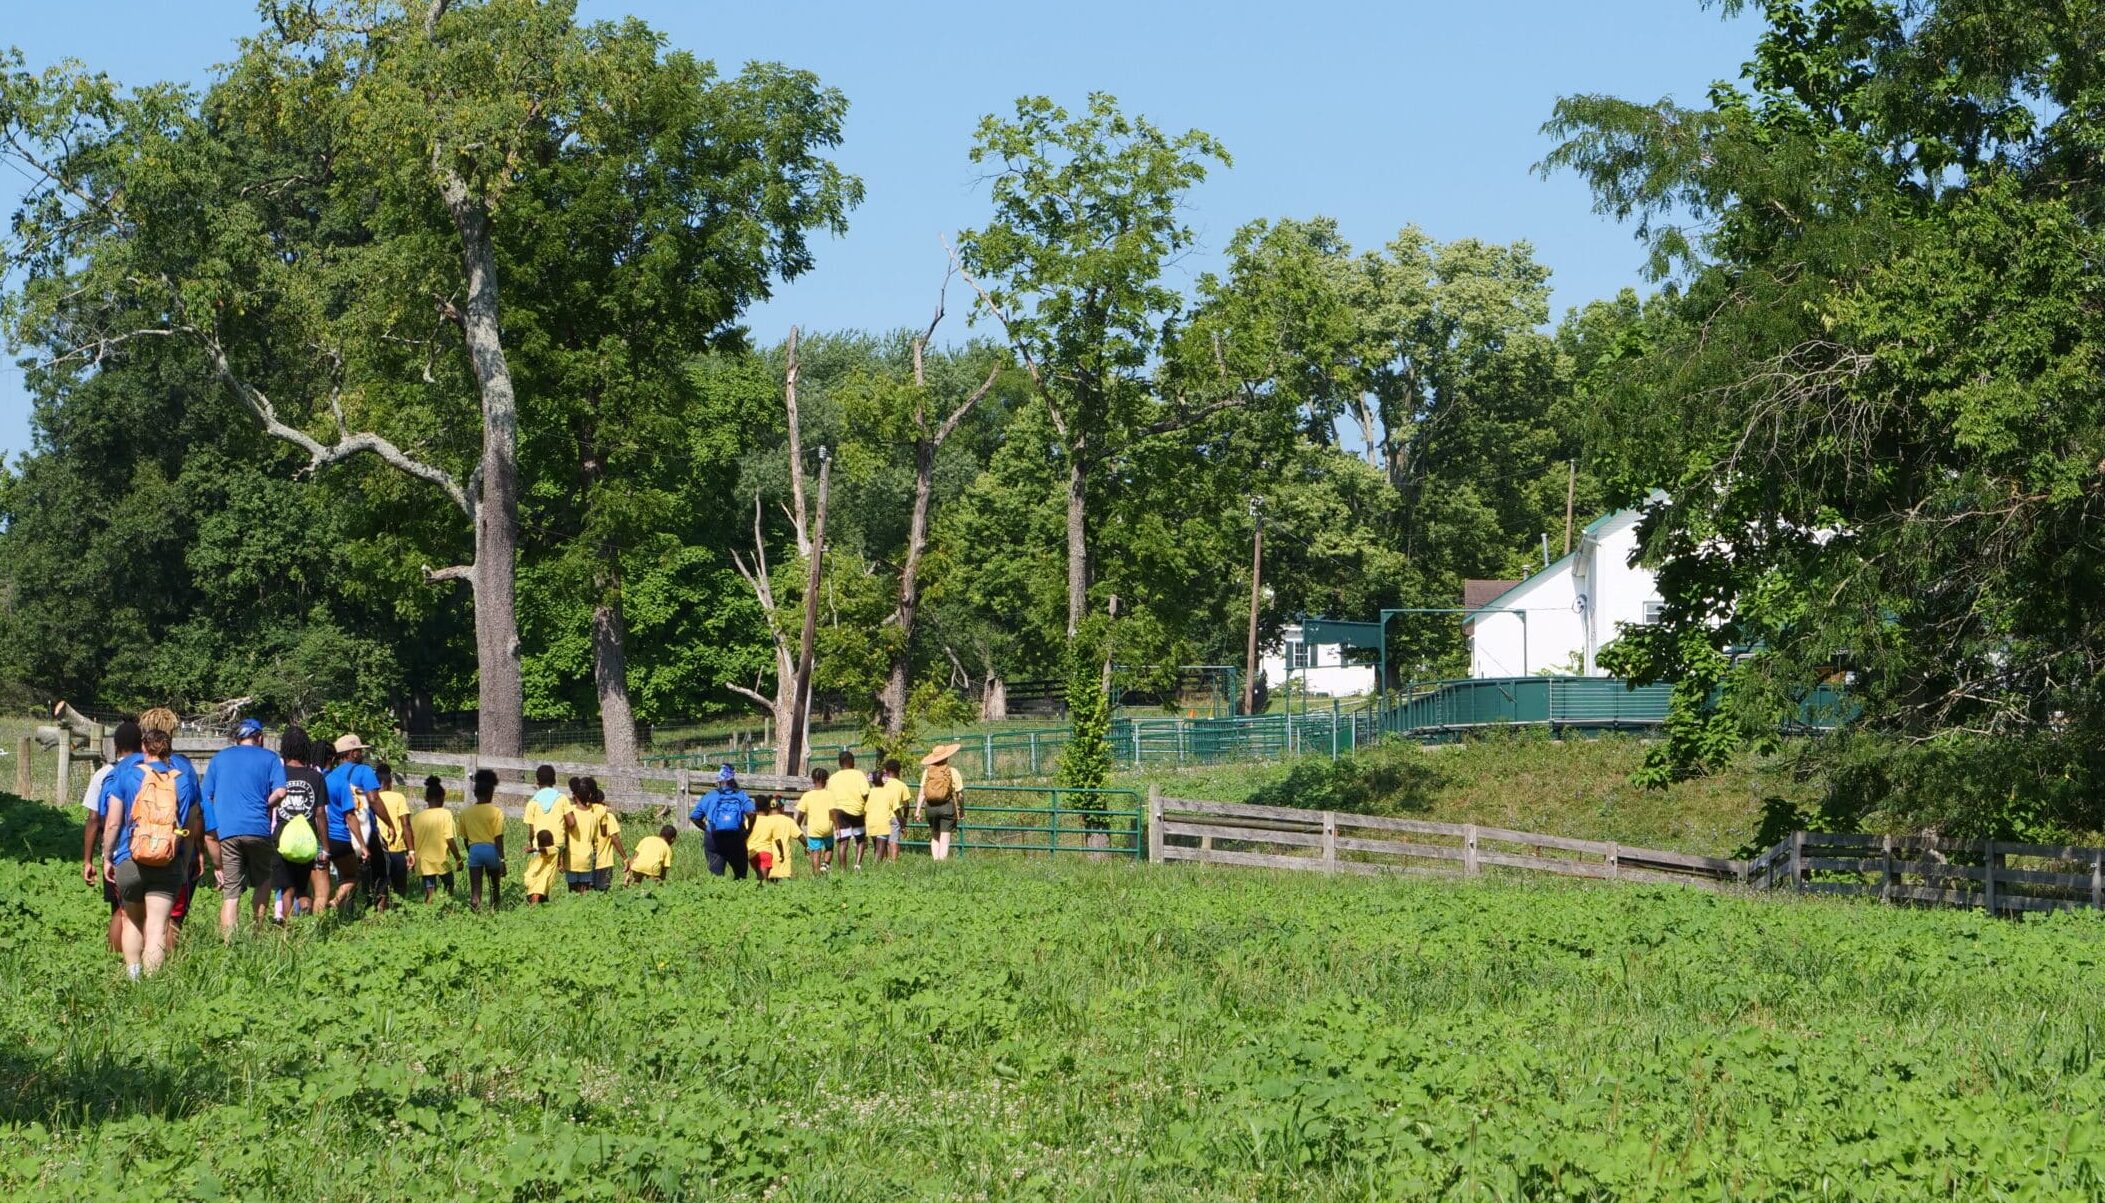 instructors lead group of children through pasture